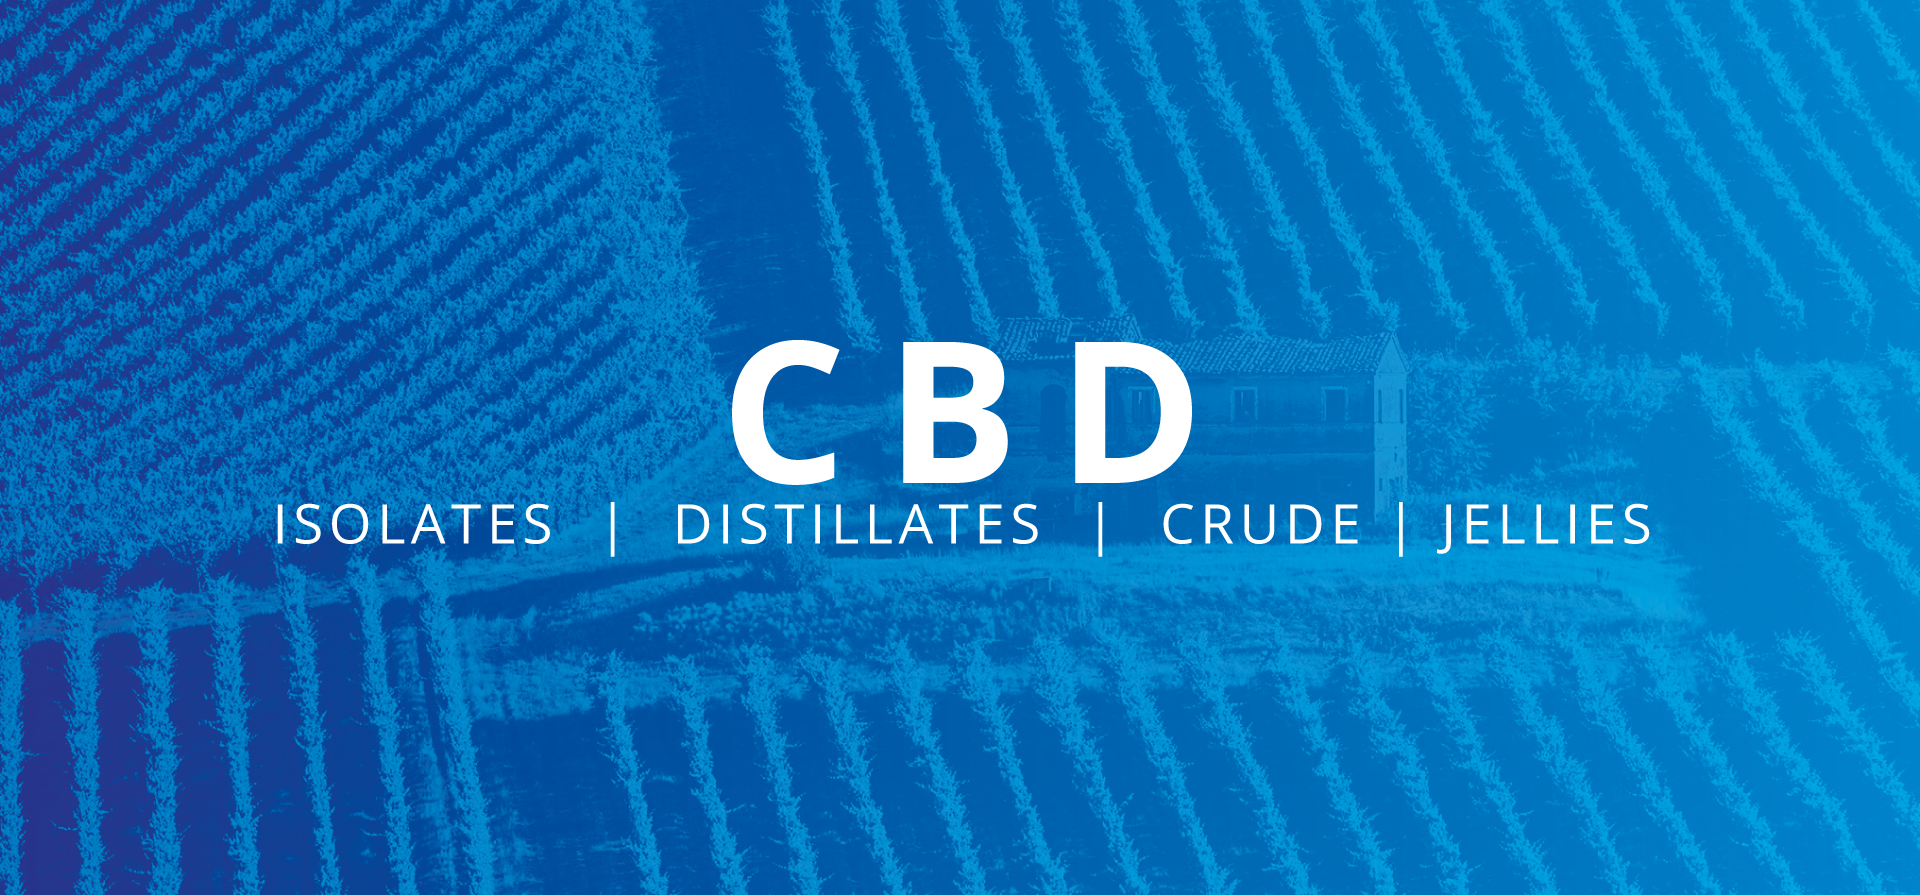 What is CBD (Cannabidiol)?